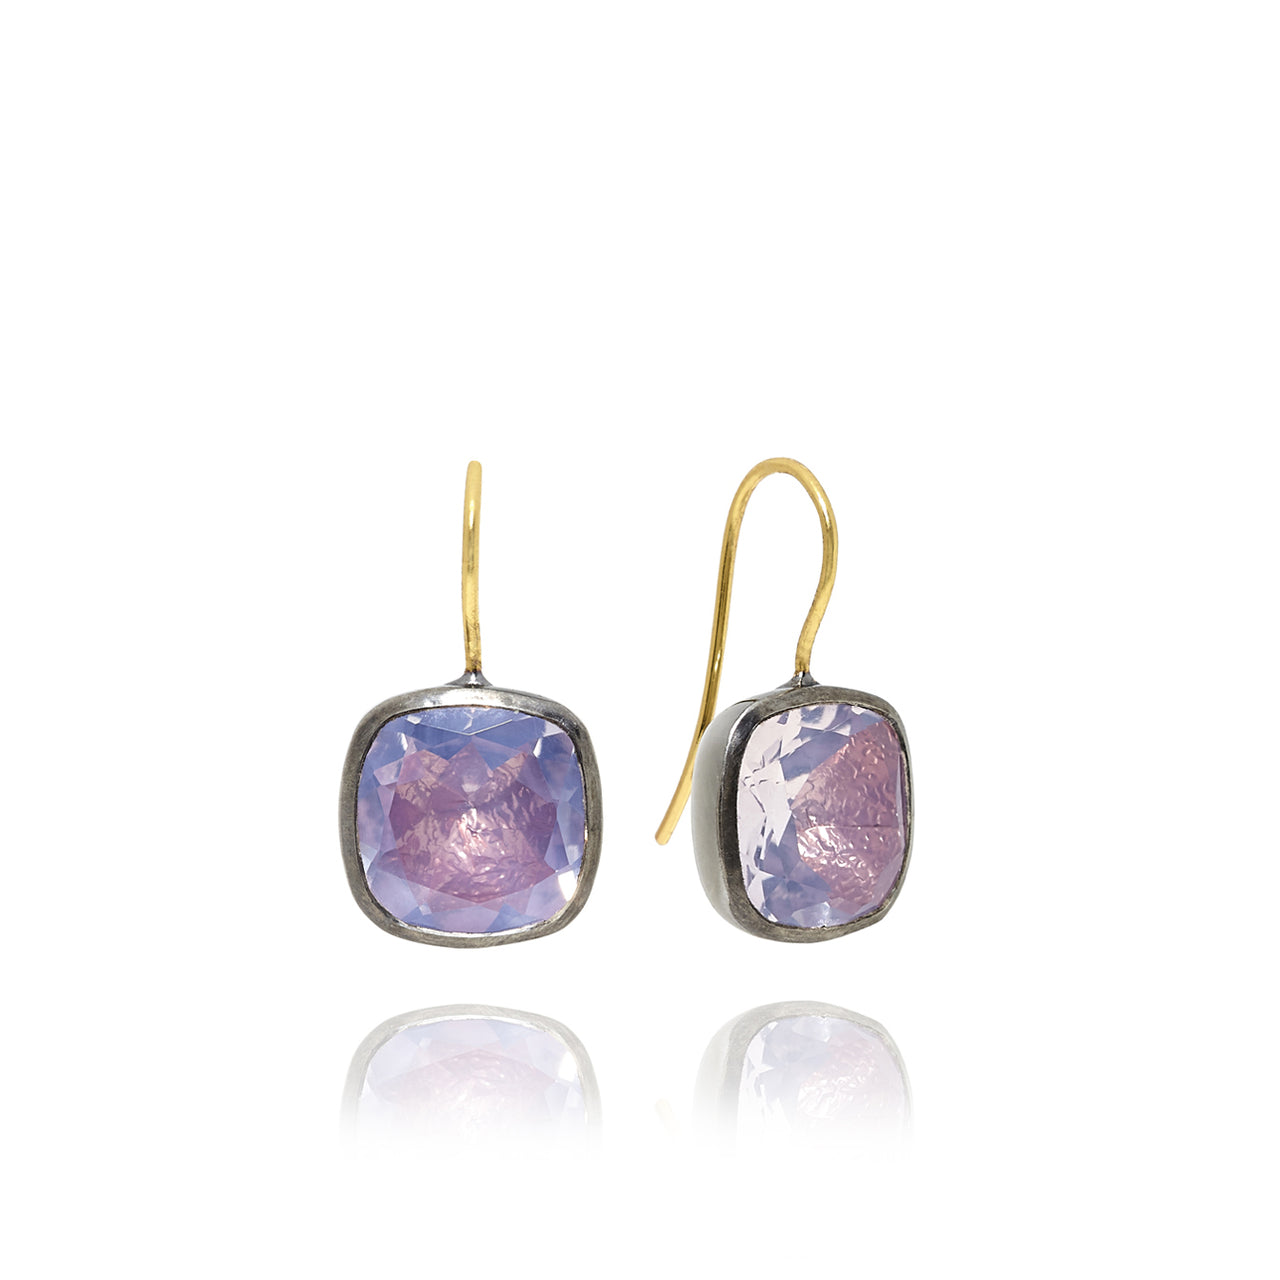 Luzia Button Earrings in Lavender Moon Quartz